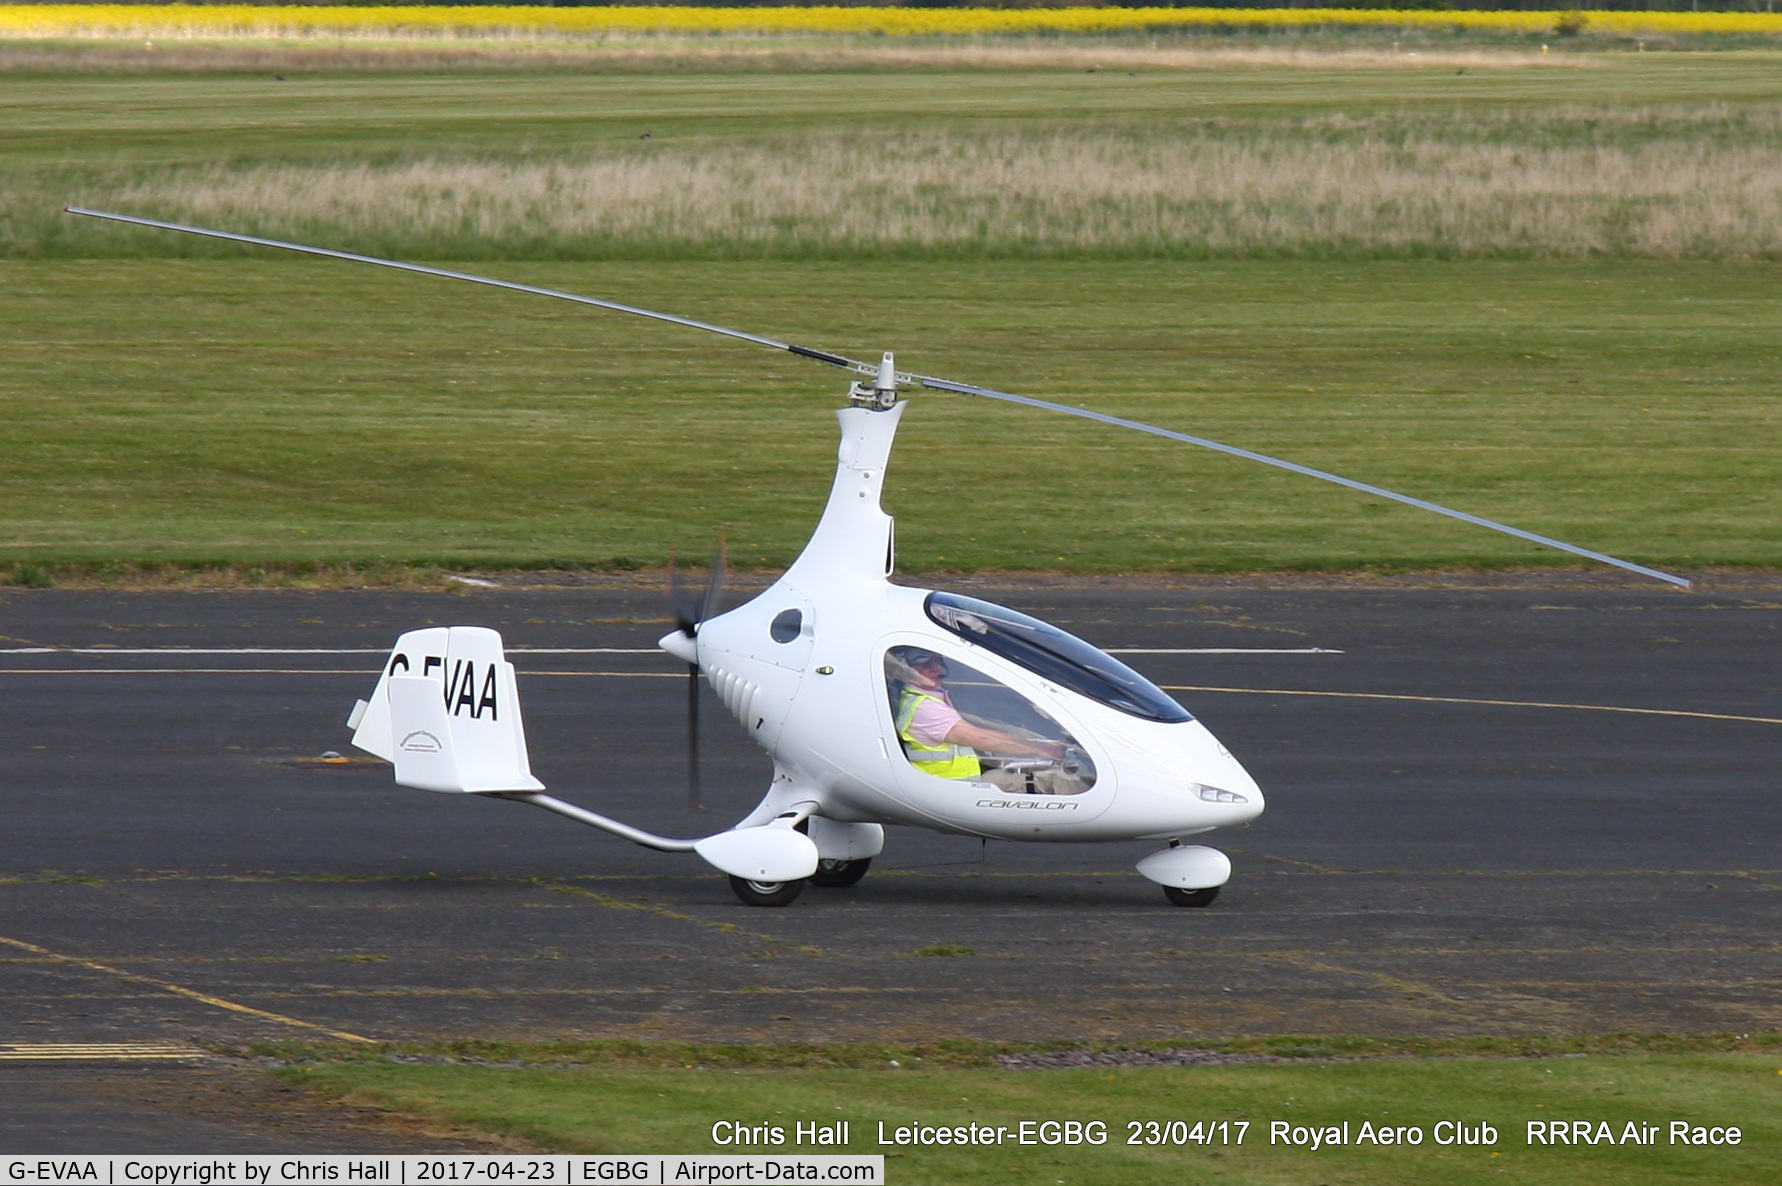 G-EVAA, 2015 RotorSport UK Cavalon C/N RSUK/CVLN/014, at Leicester